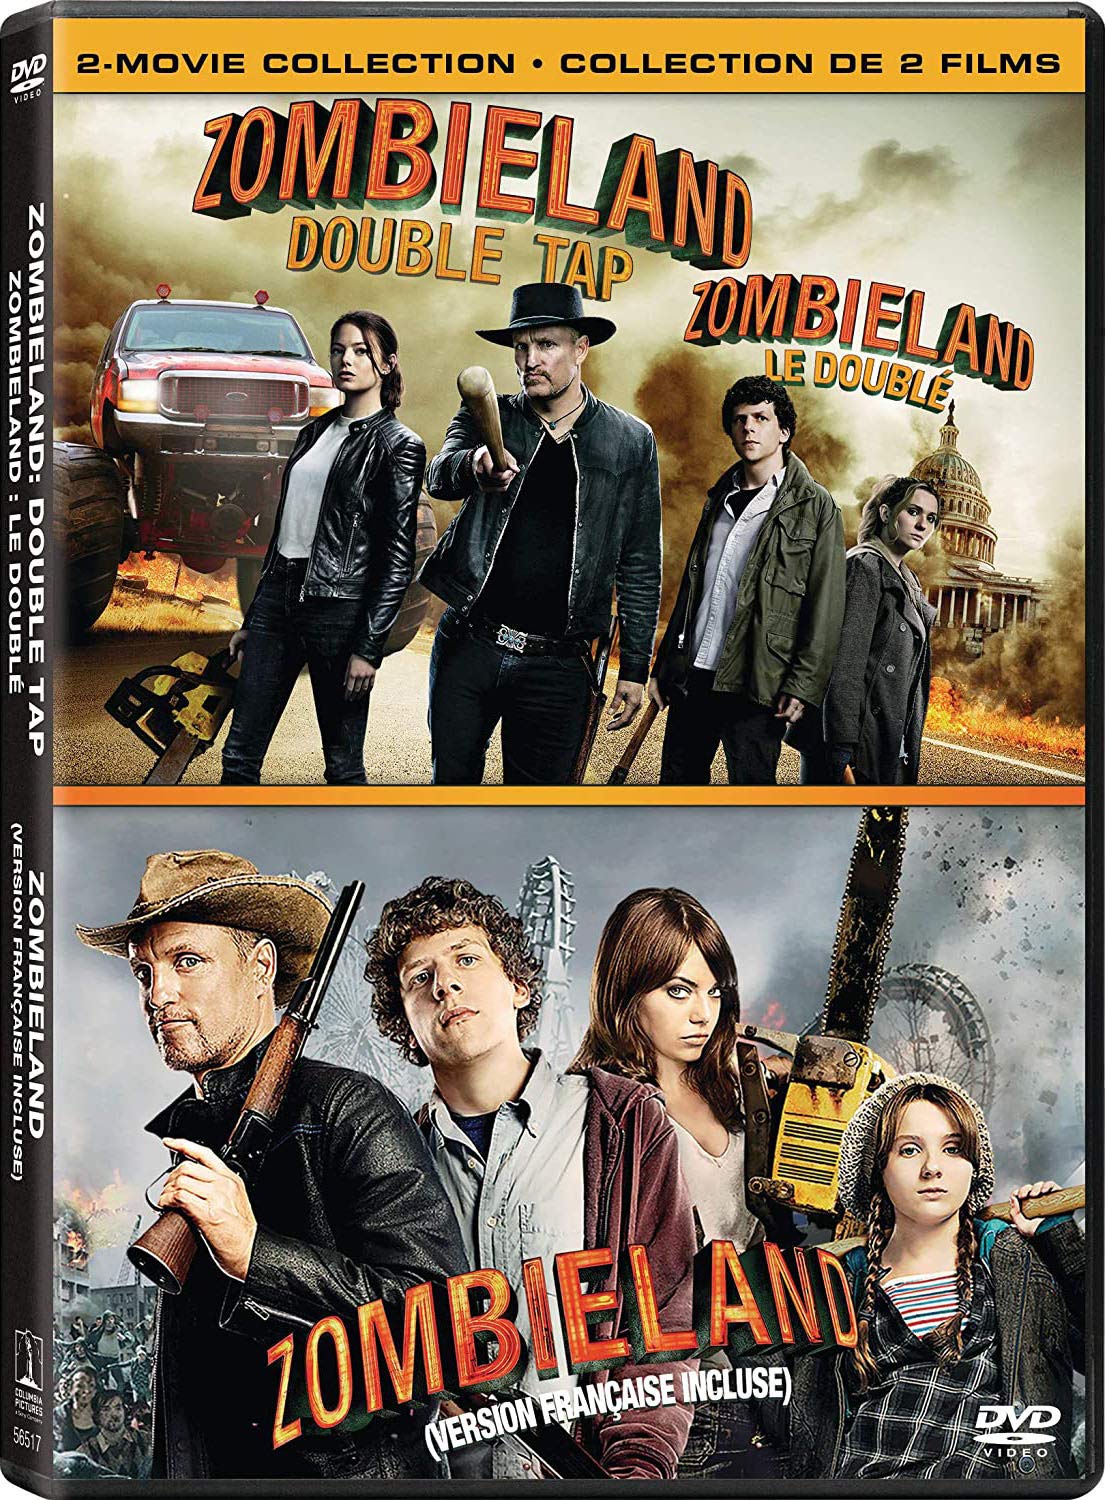 ZOMBIELAND (2009) / ZOMBIELAND 2: DOUBLE TAP – SET on MovieShack